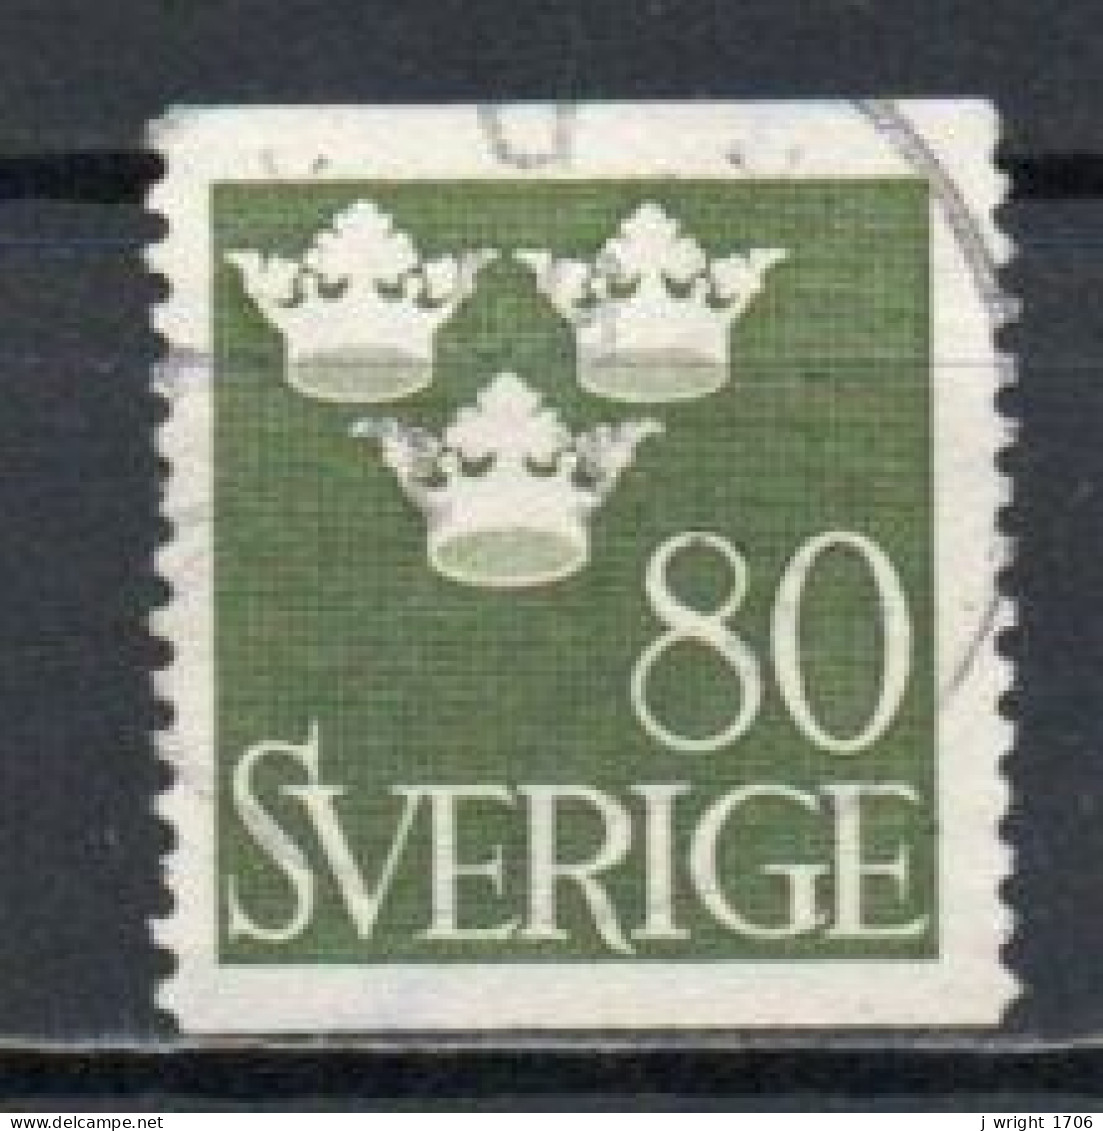 Sweden, 1948, Three Crowns, 80ö, USED - Oblitérés